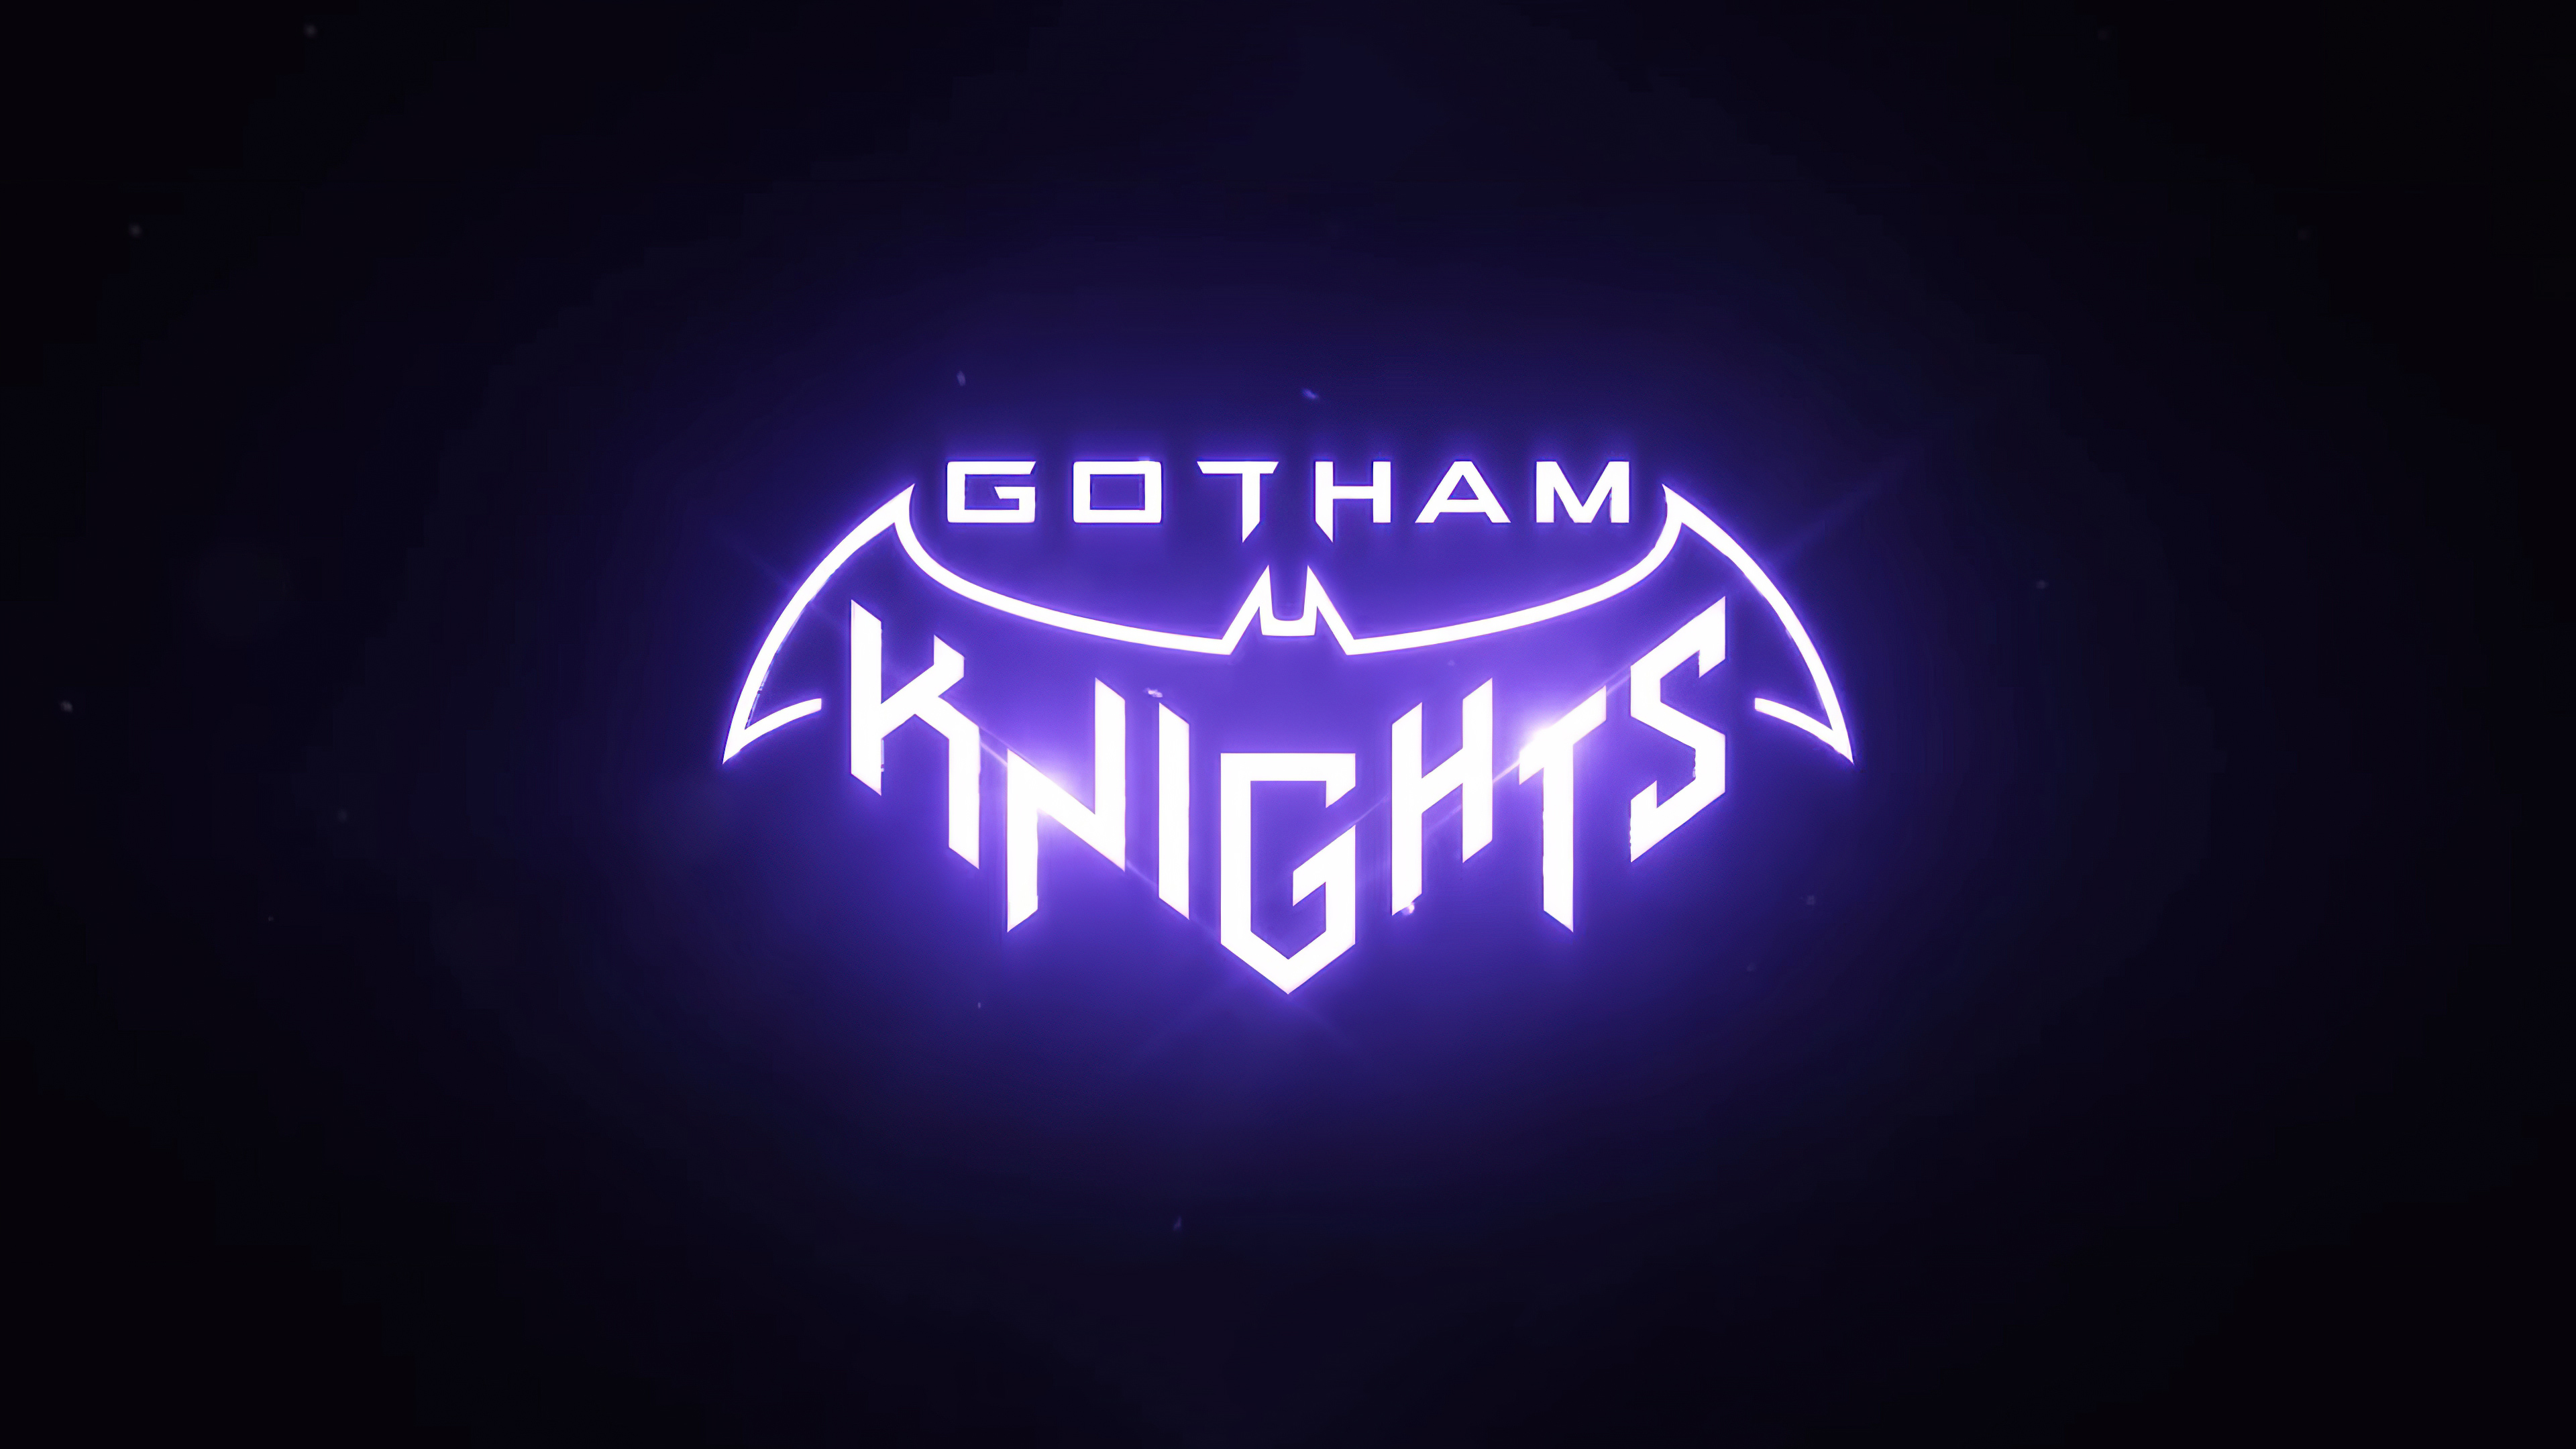 ps5 gotham knights download